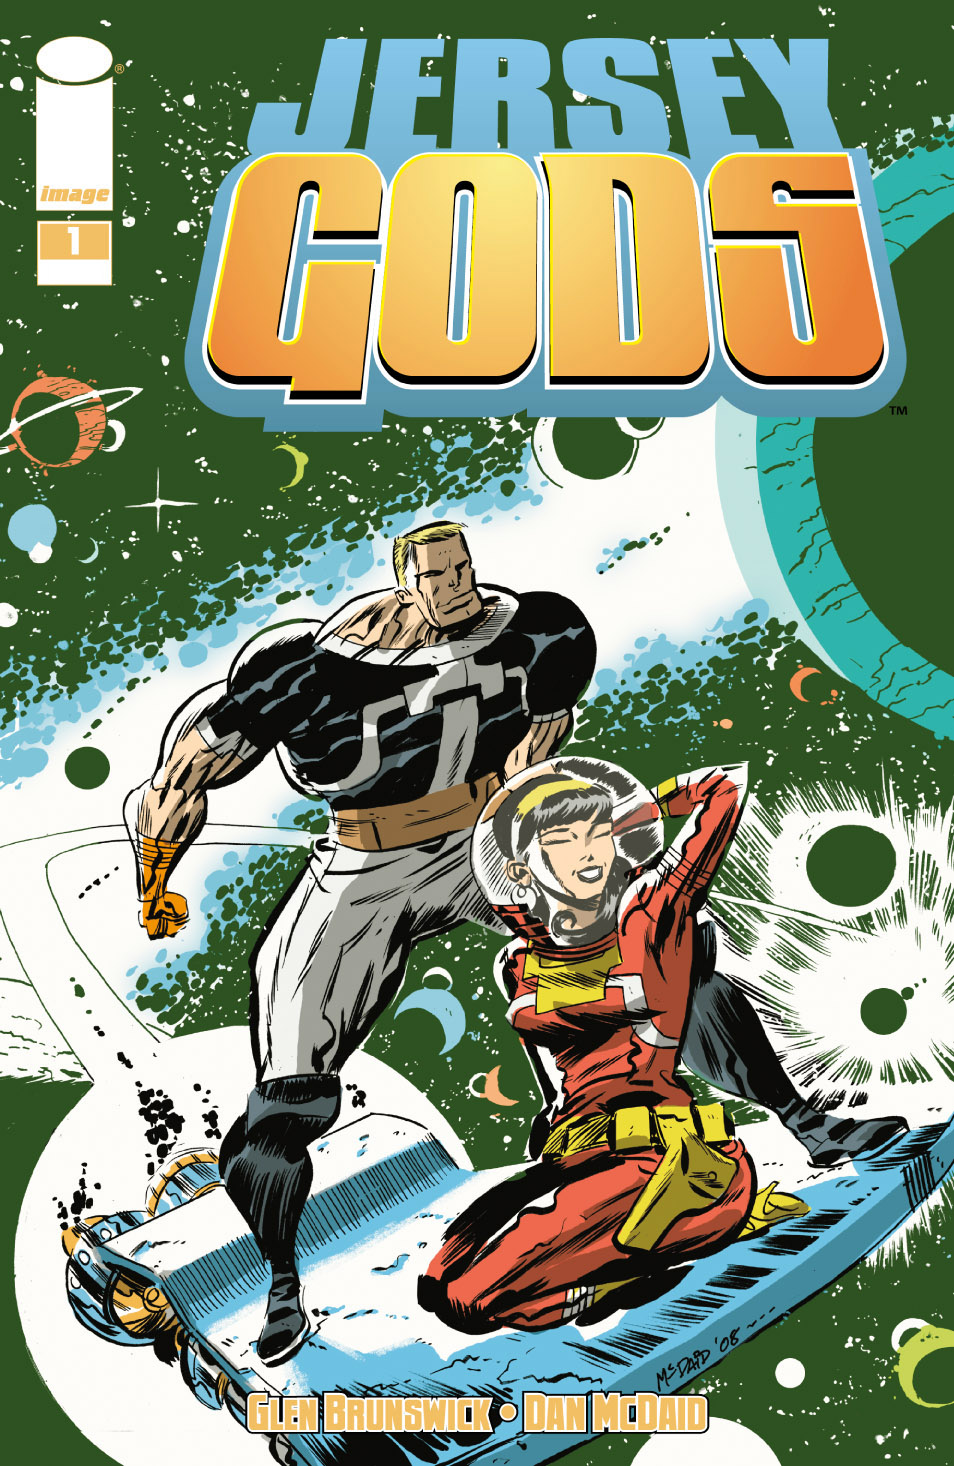 Read online Jersey Gods comic -  Issue #1 - 2